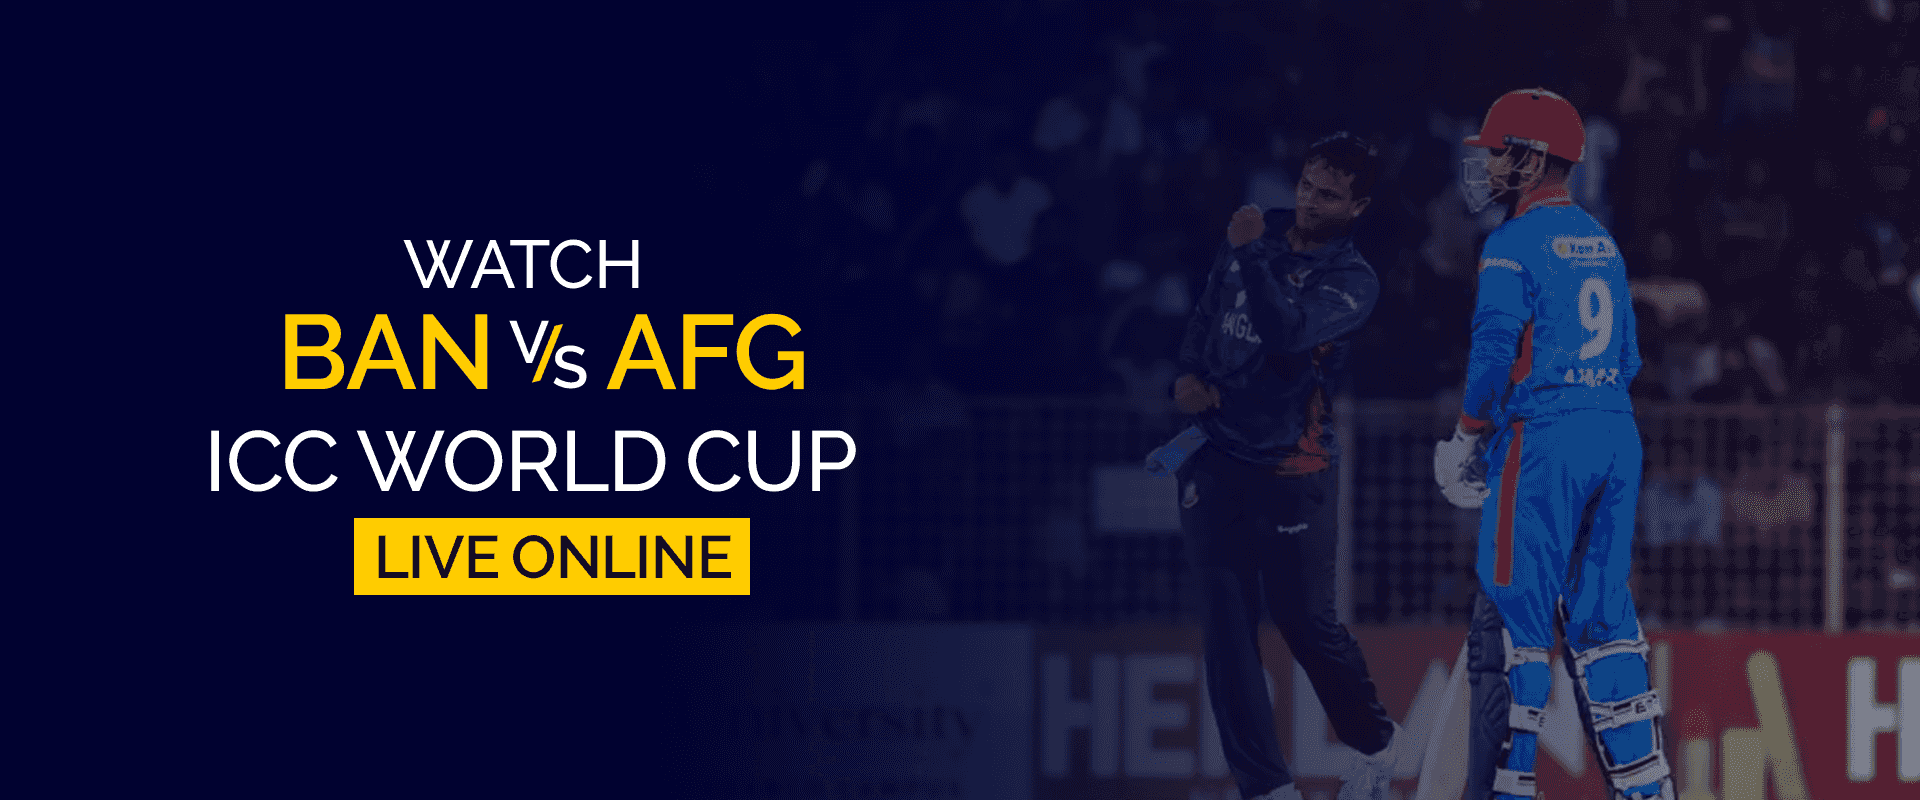 Bekijk BAN vs AFG ICC World Cup live online